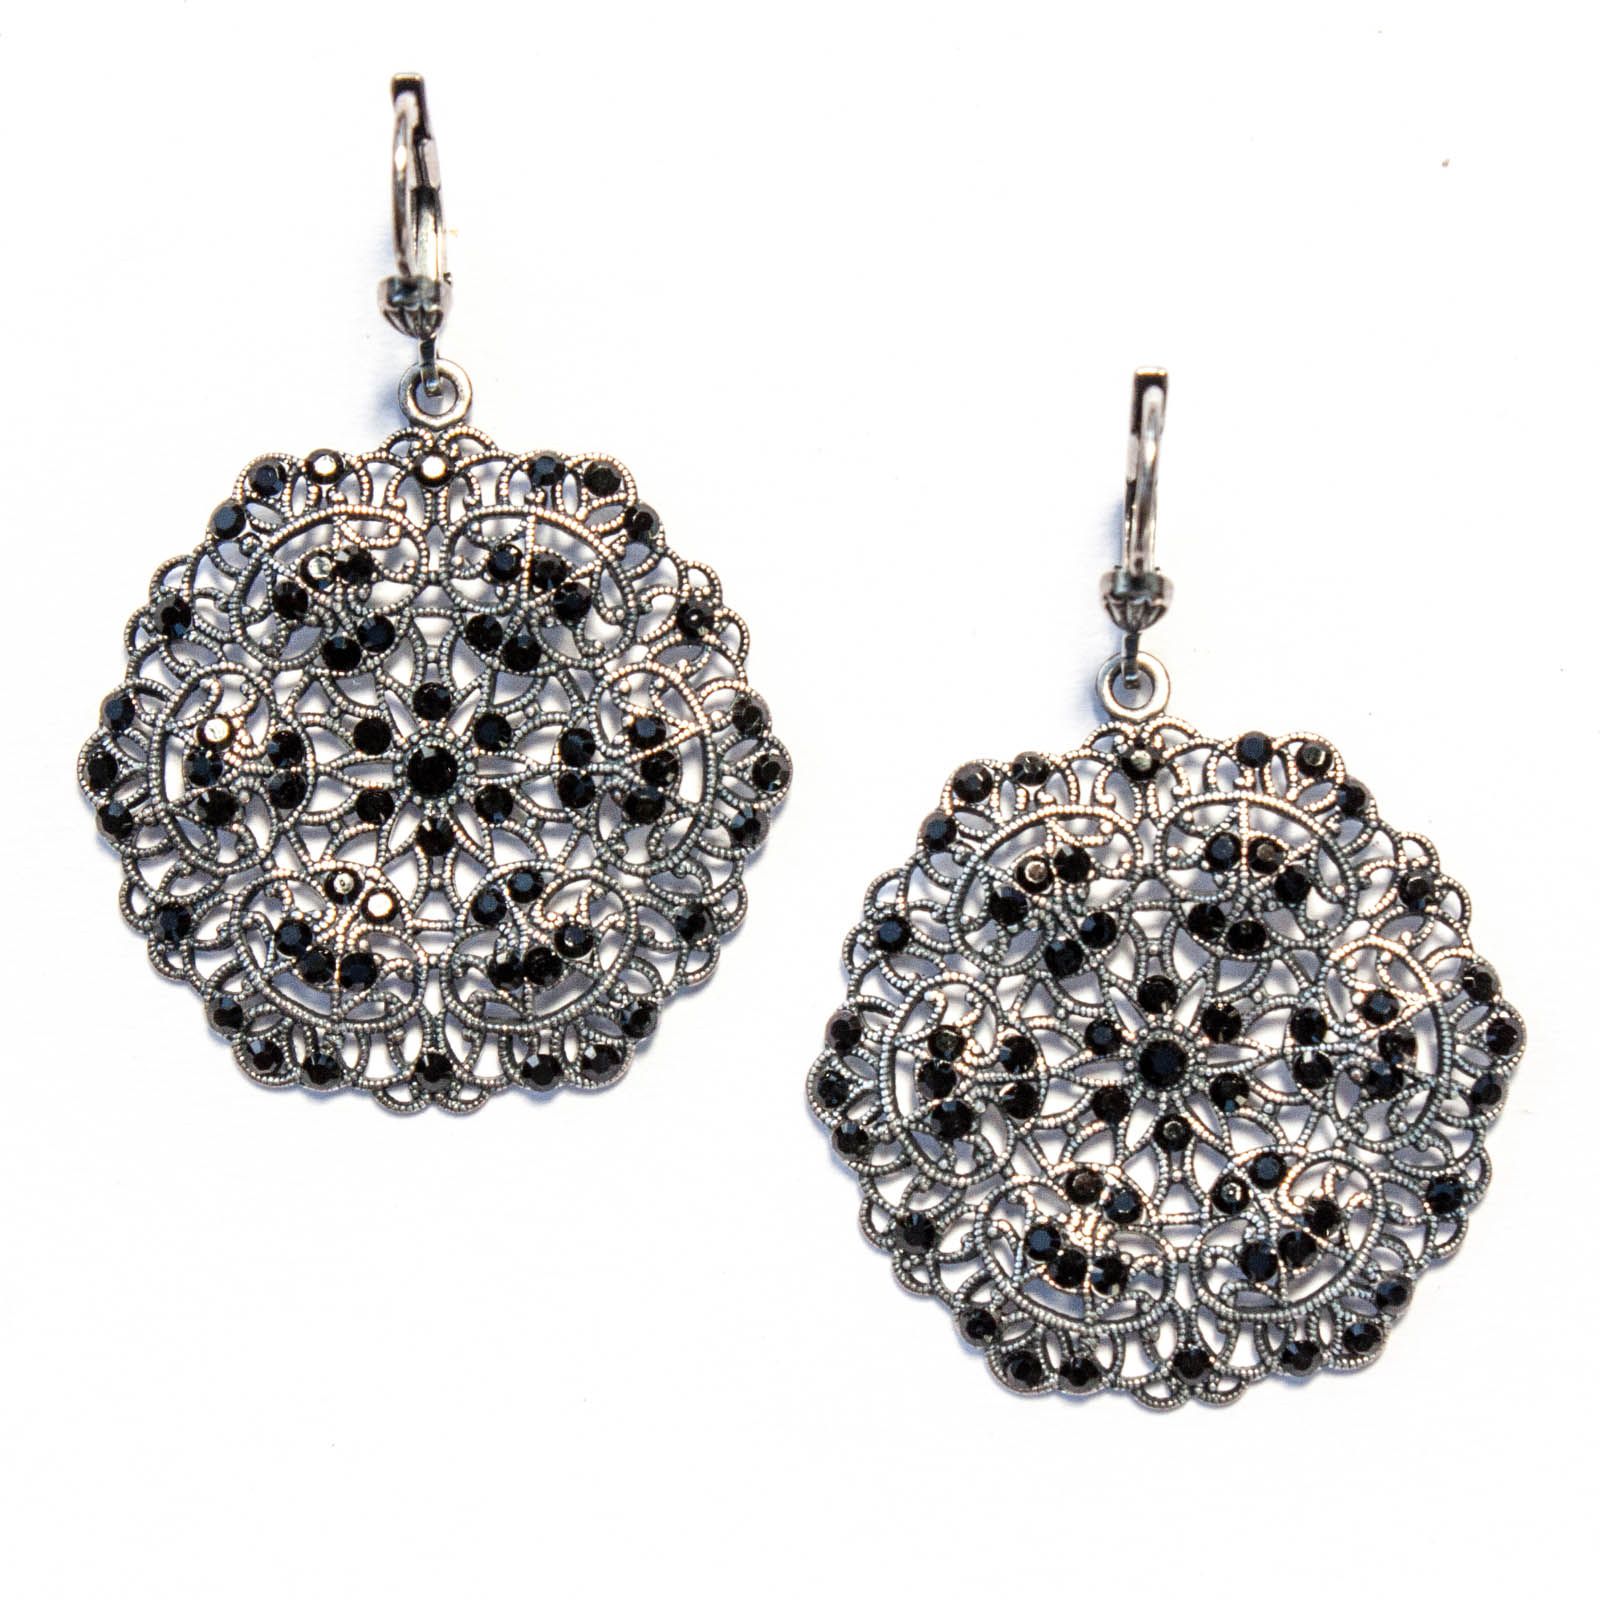 Small LV silver earrings